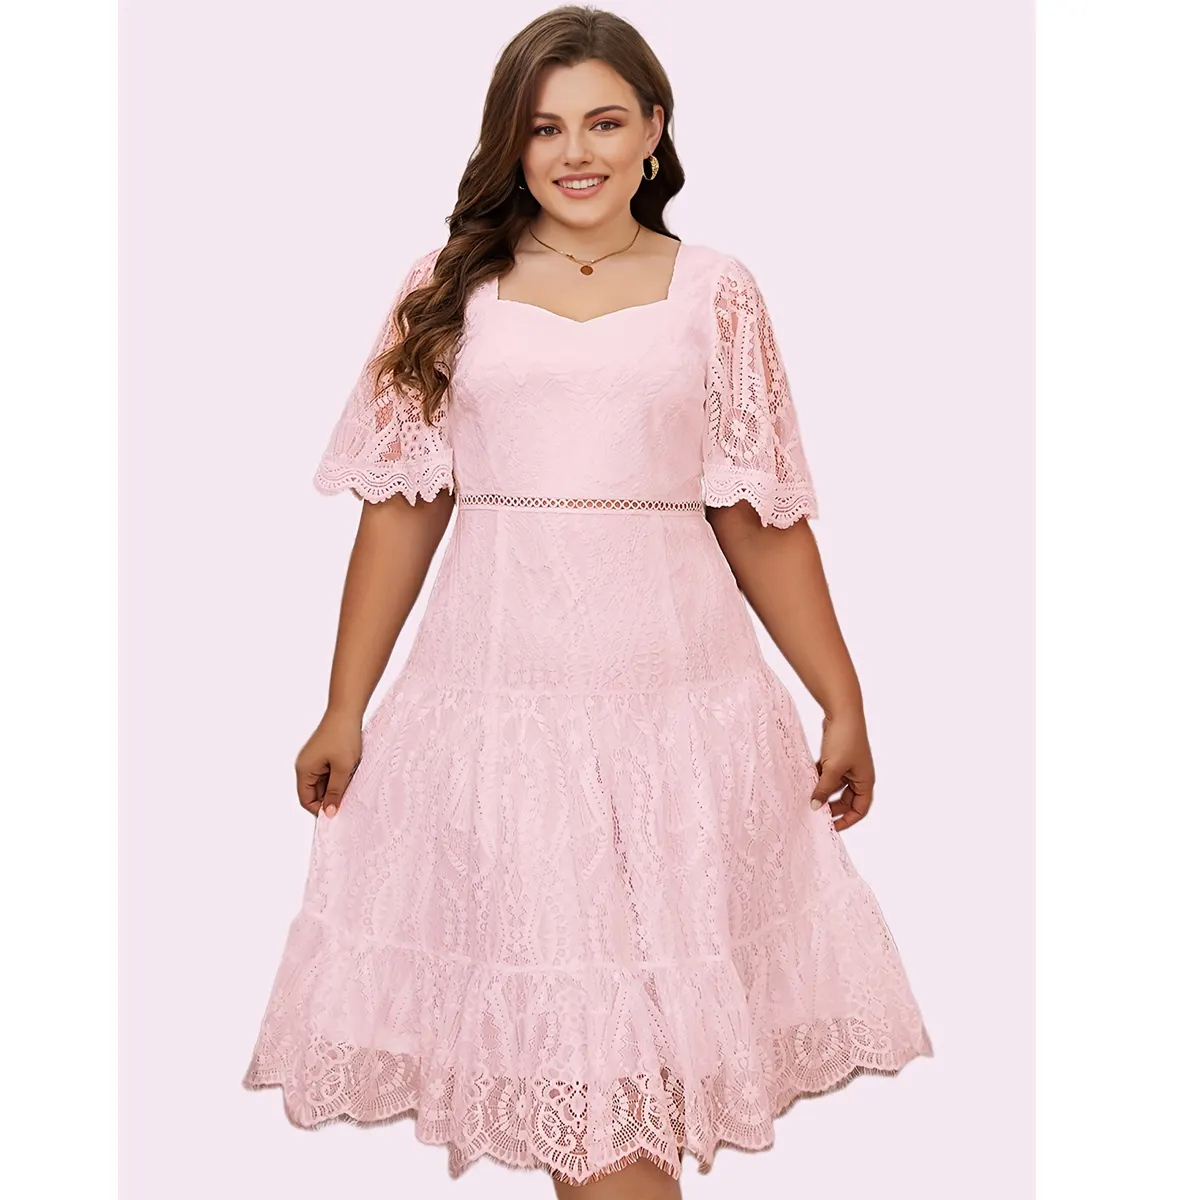 TICSOA Women's Lace Dress Wedding Bridesmaid Dresses Irregular Party Club Plus Size Pink Summer Mini Casual Dresses Natural